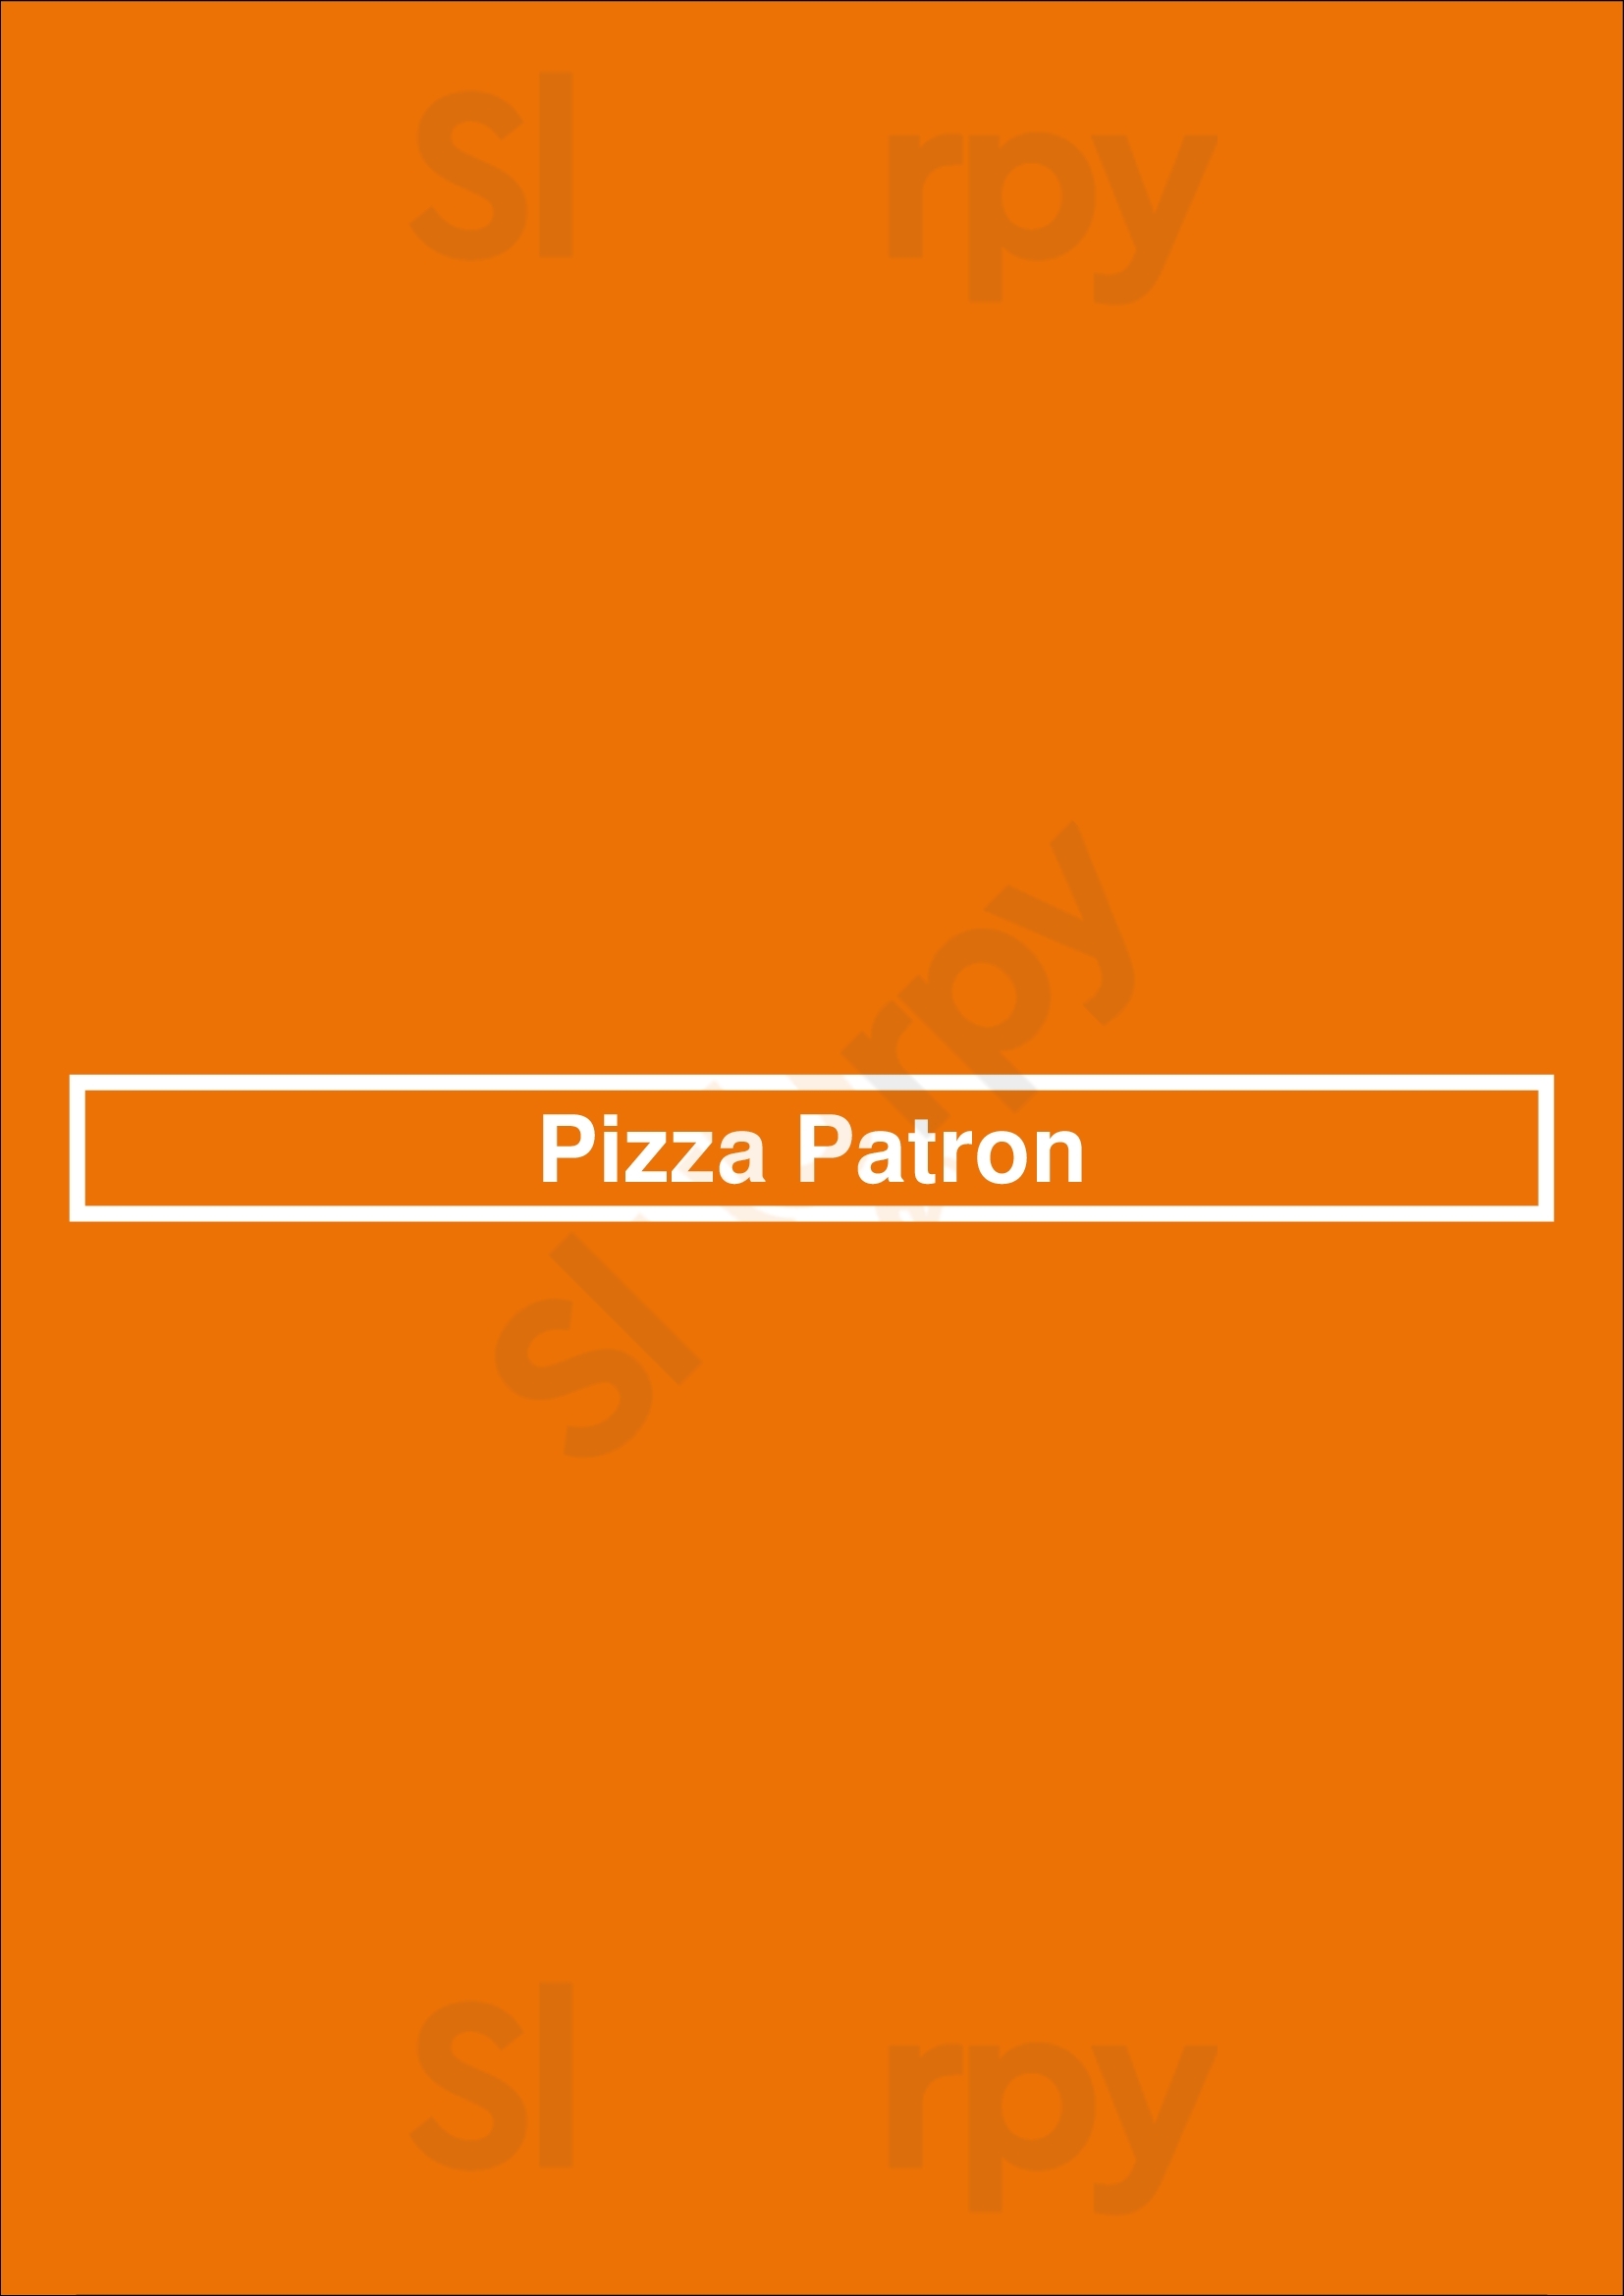 Pizza Patron Plano Menu - 1